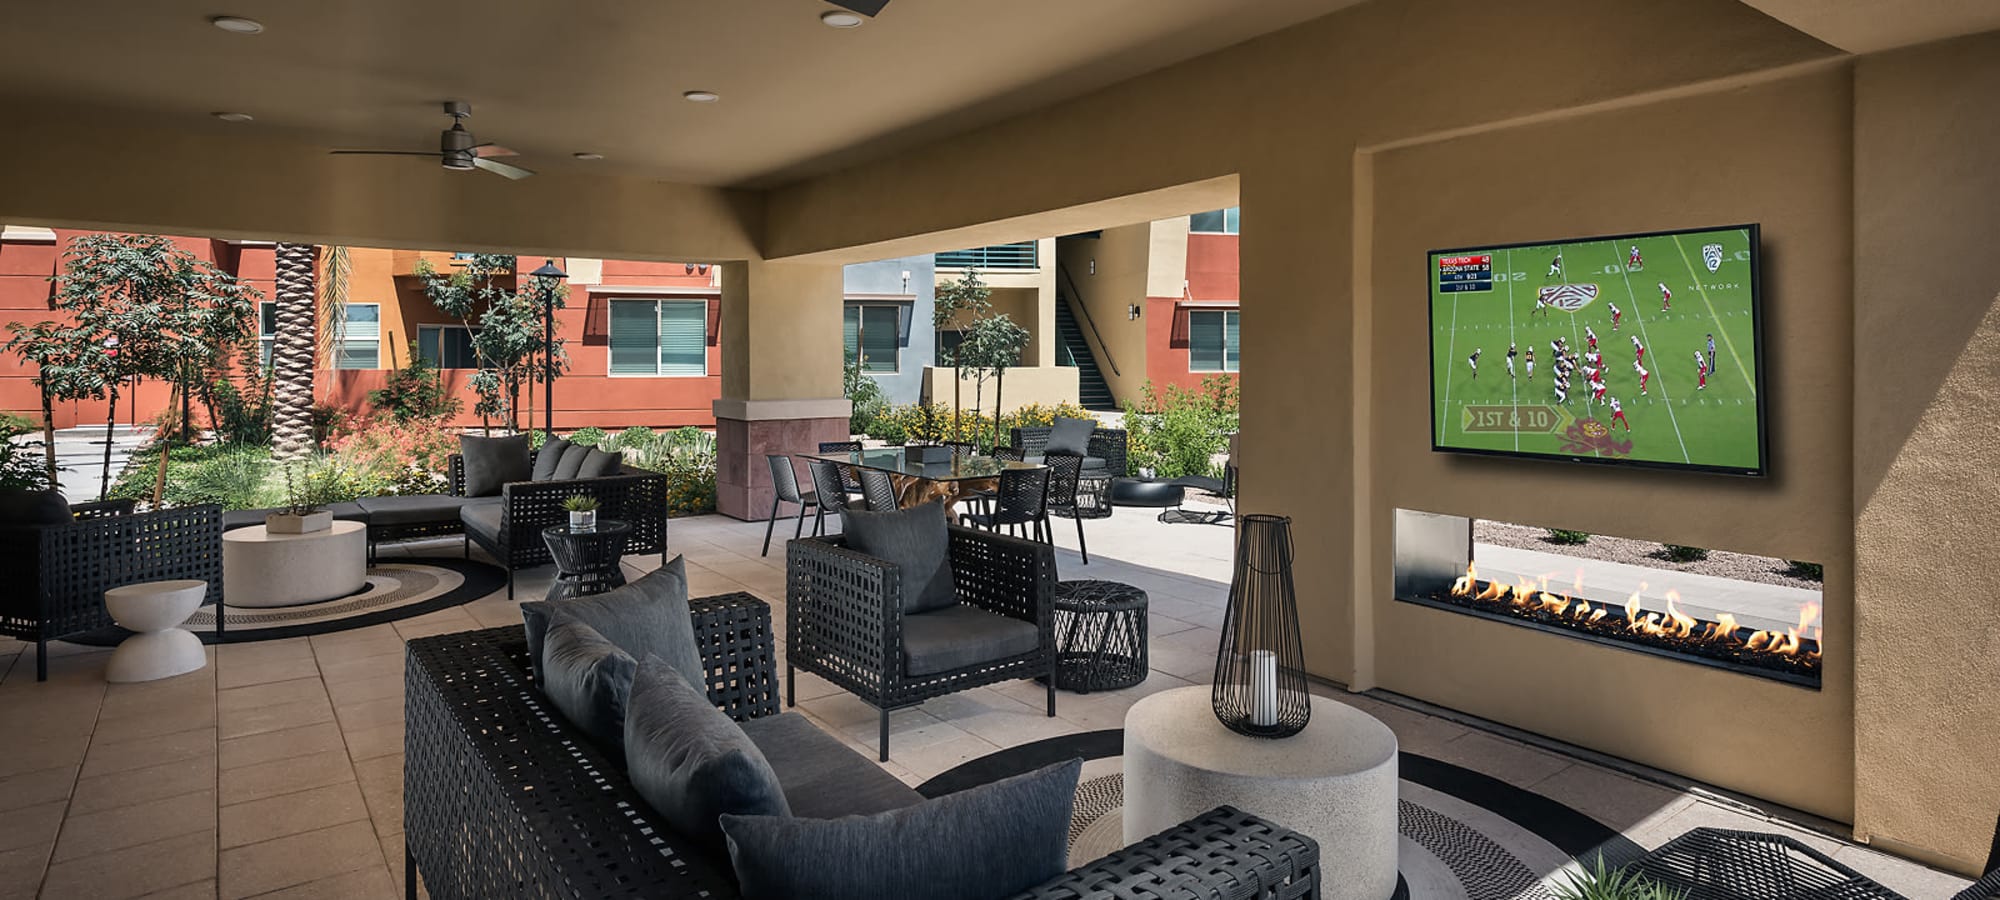 Outdoor Lounge at Villa Vita Apartments in Peoria, Arizona